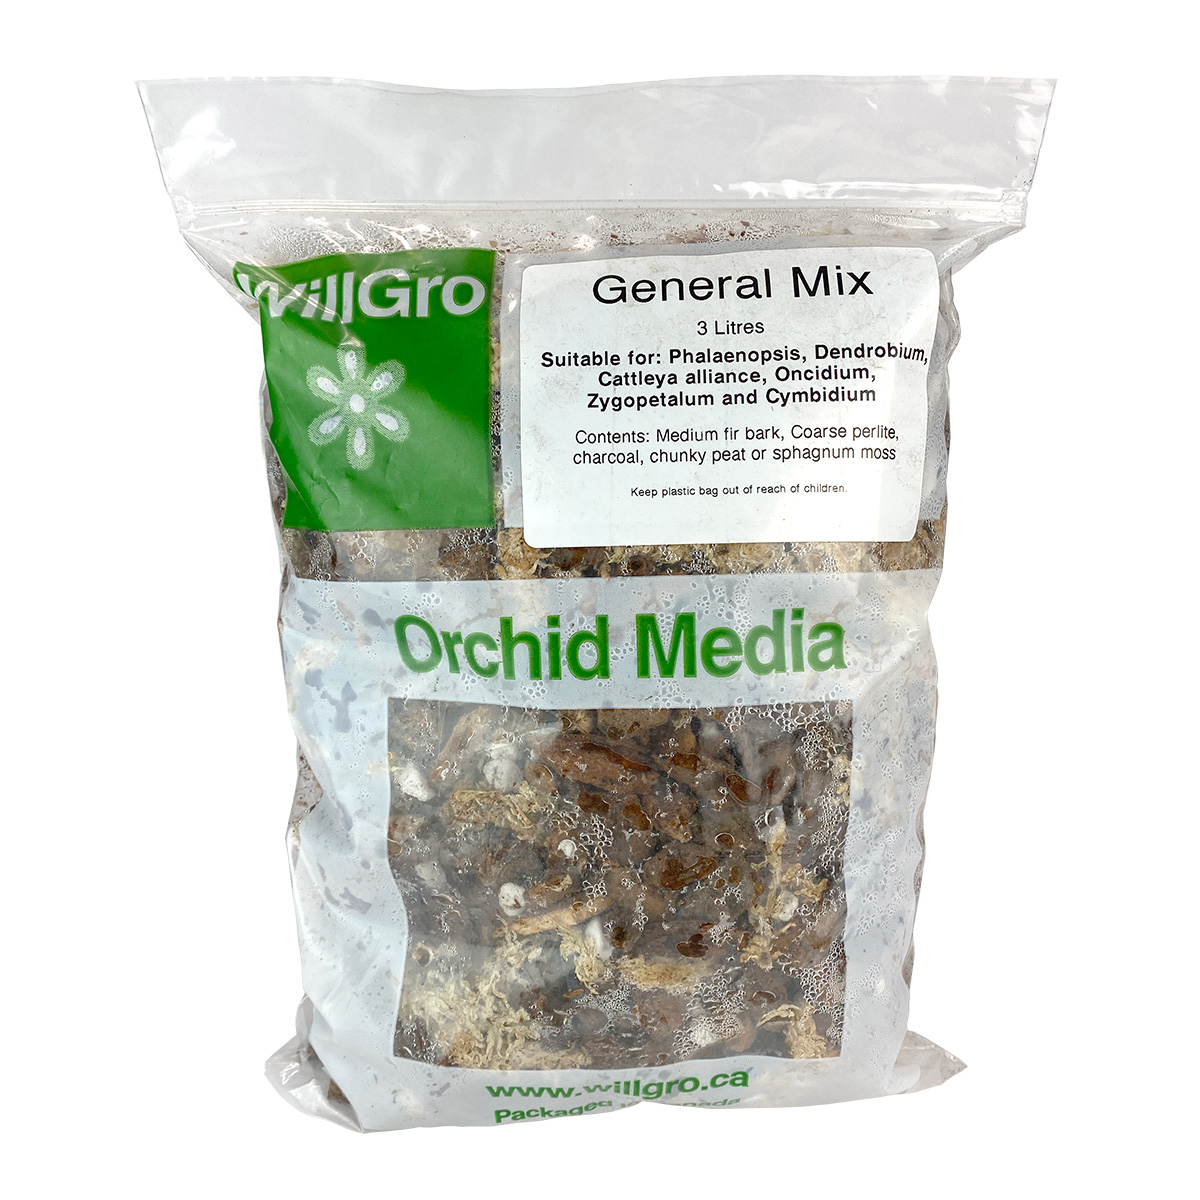 Willgro General Mix Orchid Media 3L